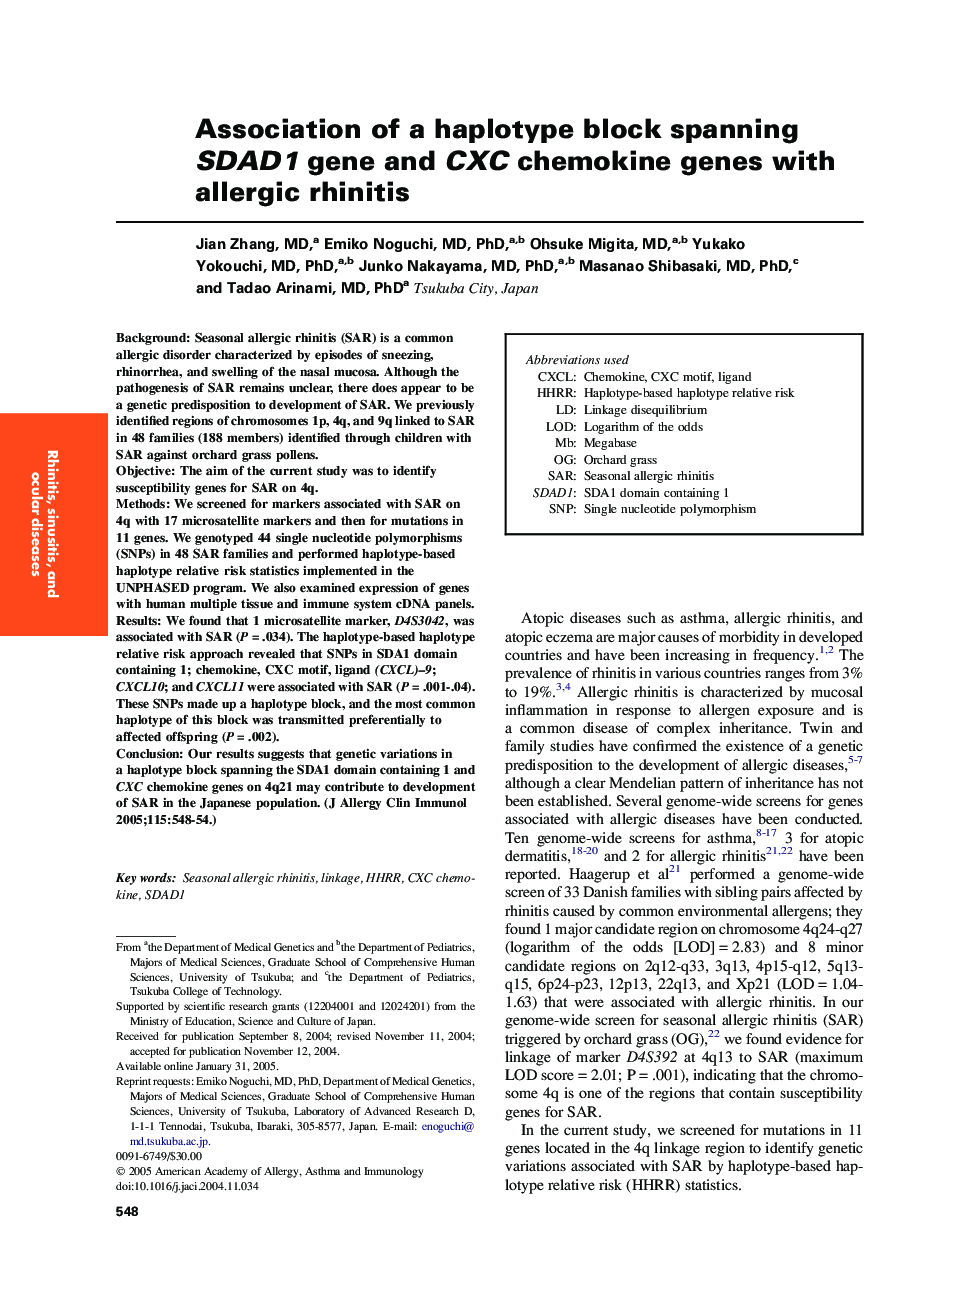 Association of a haplotype block spanning SDAD1 gene and CXC chemokine genes with allergic rhinitis